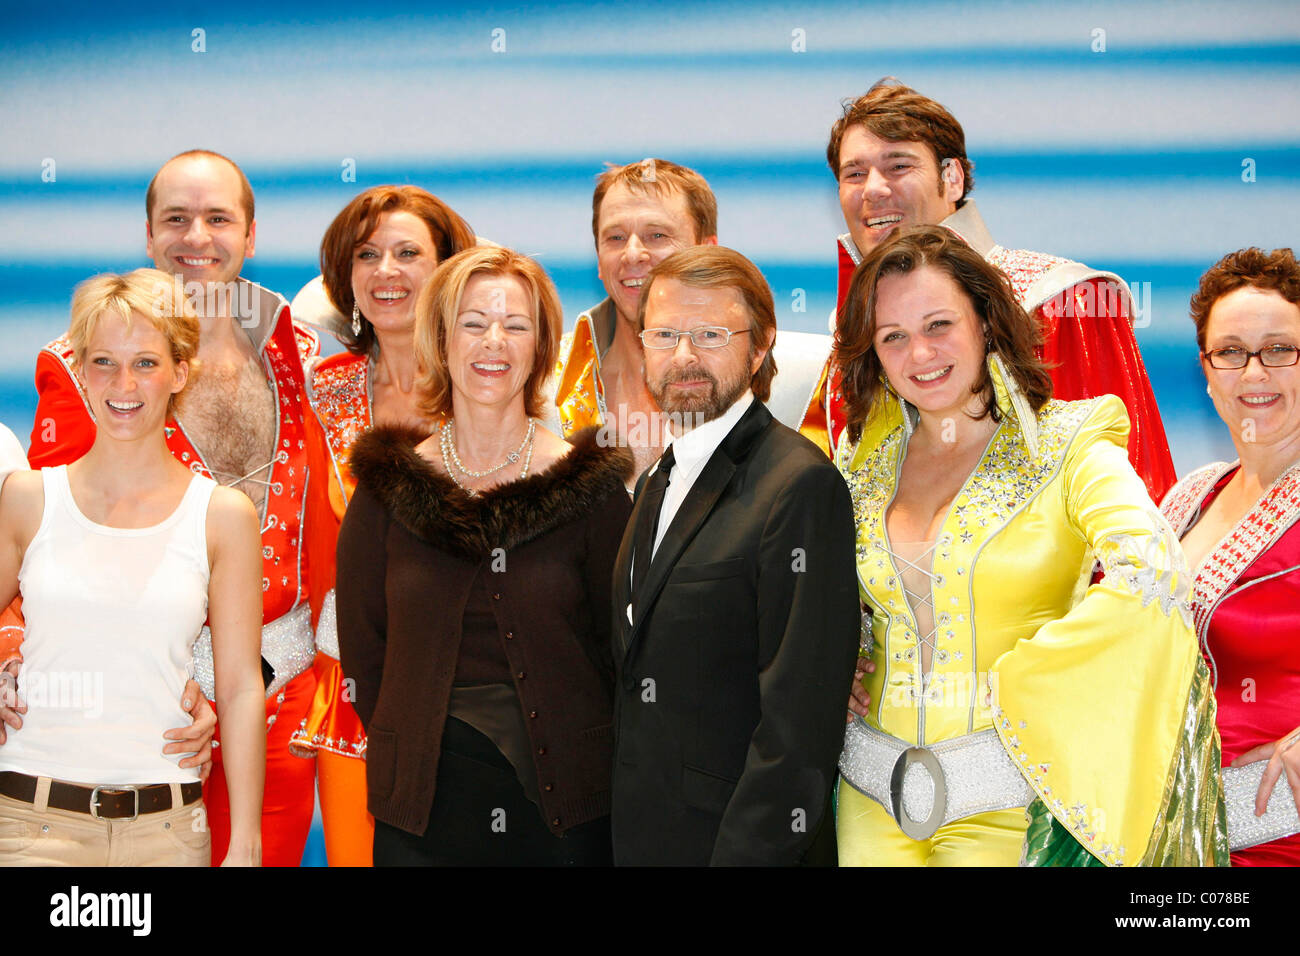 Anni-Frid Reuss, Bjrn Ulvaeus and cast German premiere of 'Mamma Mia' at Theater am Potsdamer Platz Berlin, Germany - 21.10.07, Stock Photo